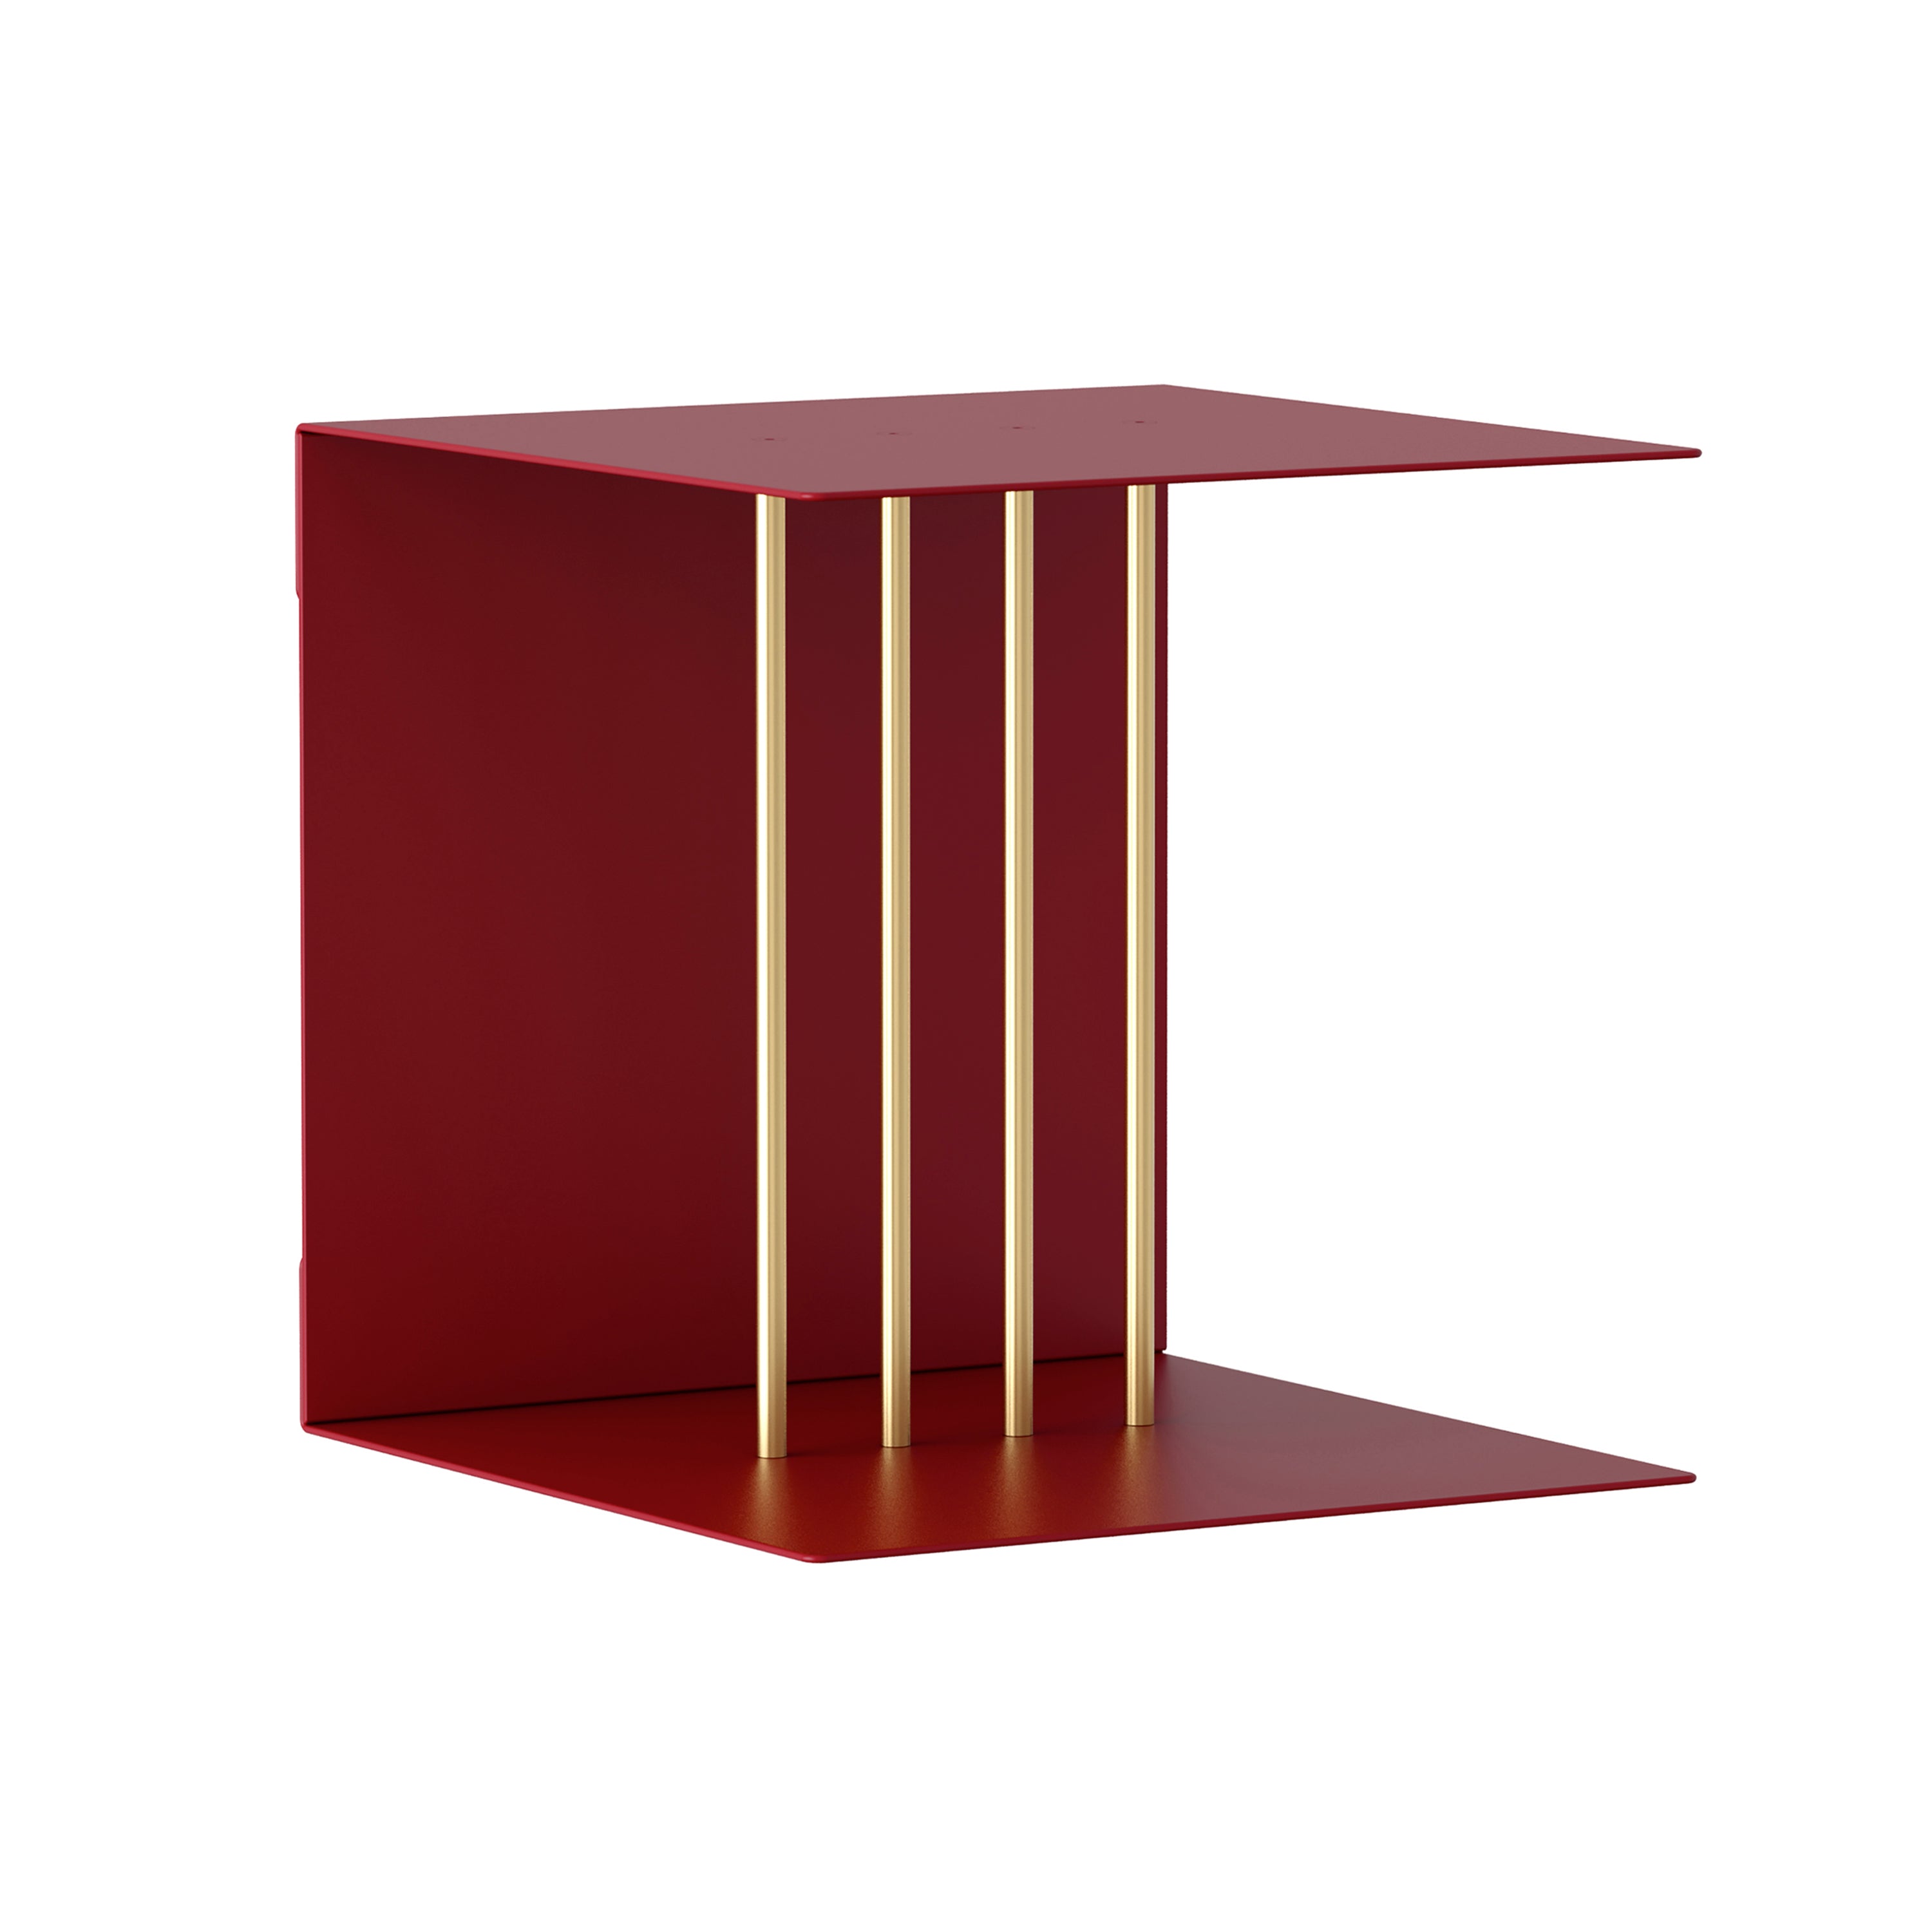 Teaser Shelf: 1 Layer + Ruby Red